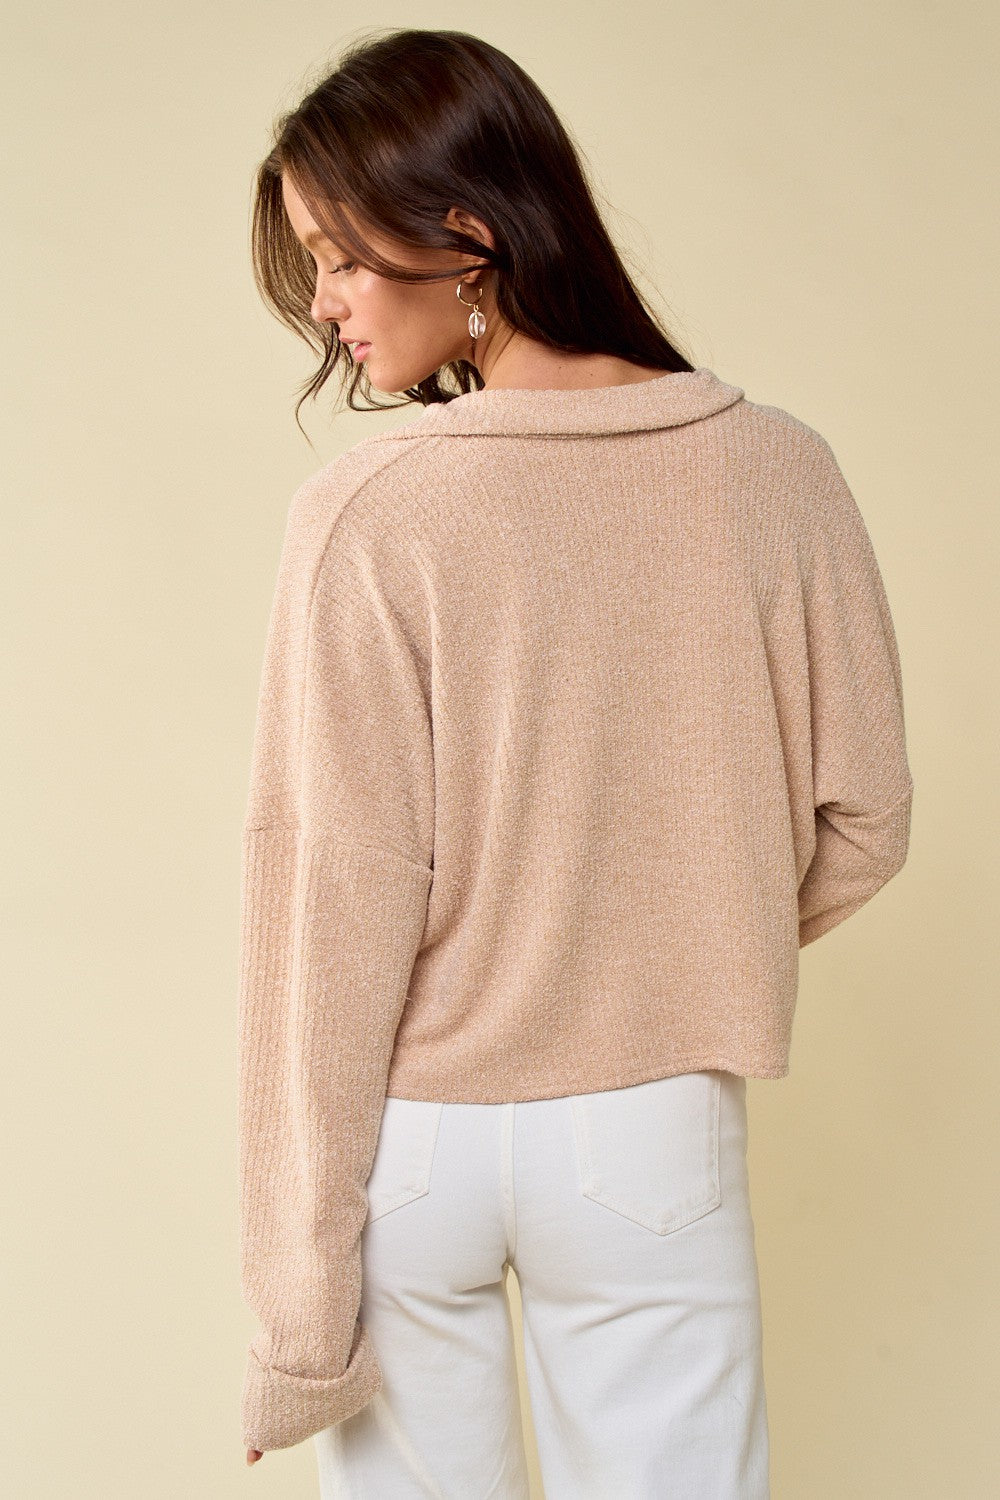 Corinne Cropped Long Sleeve Collar Sweater